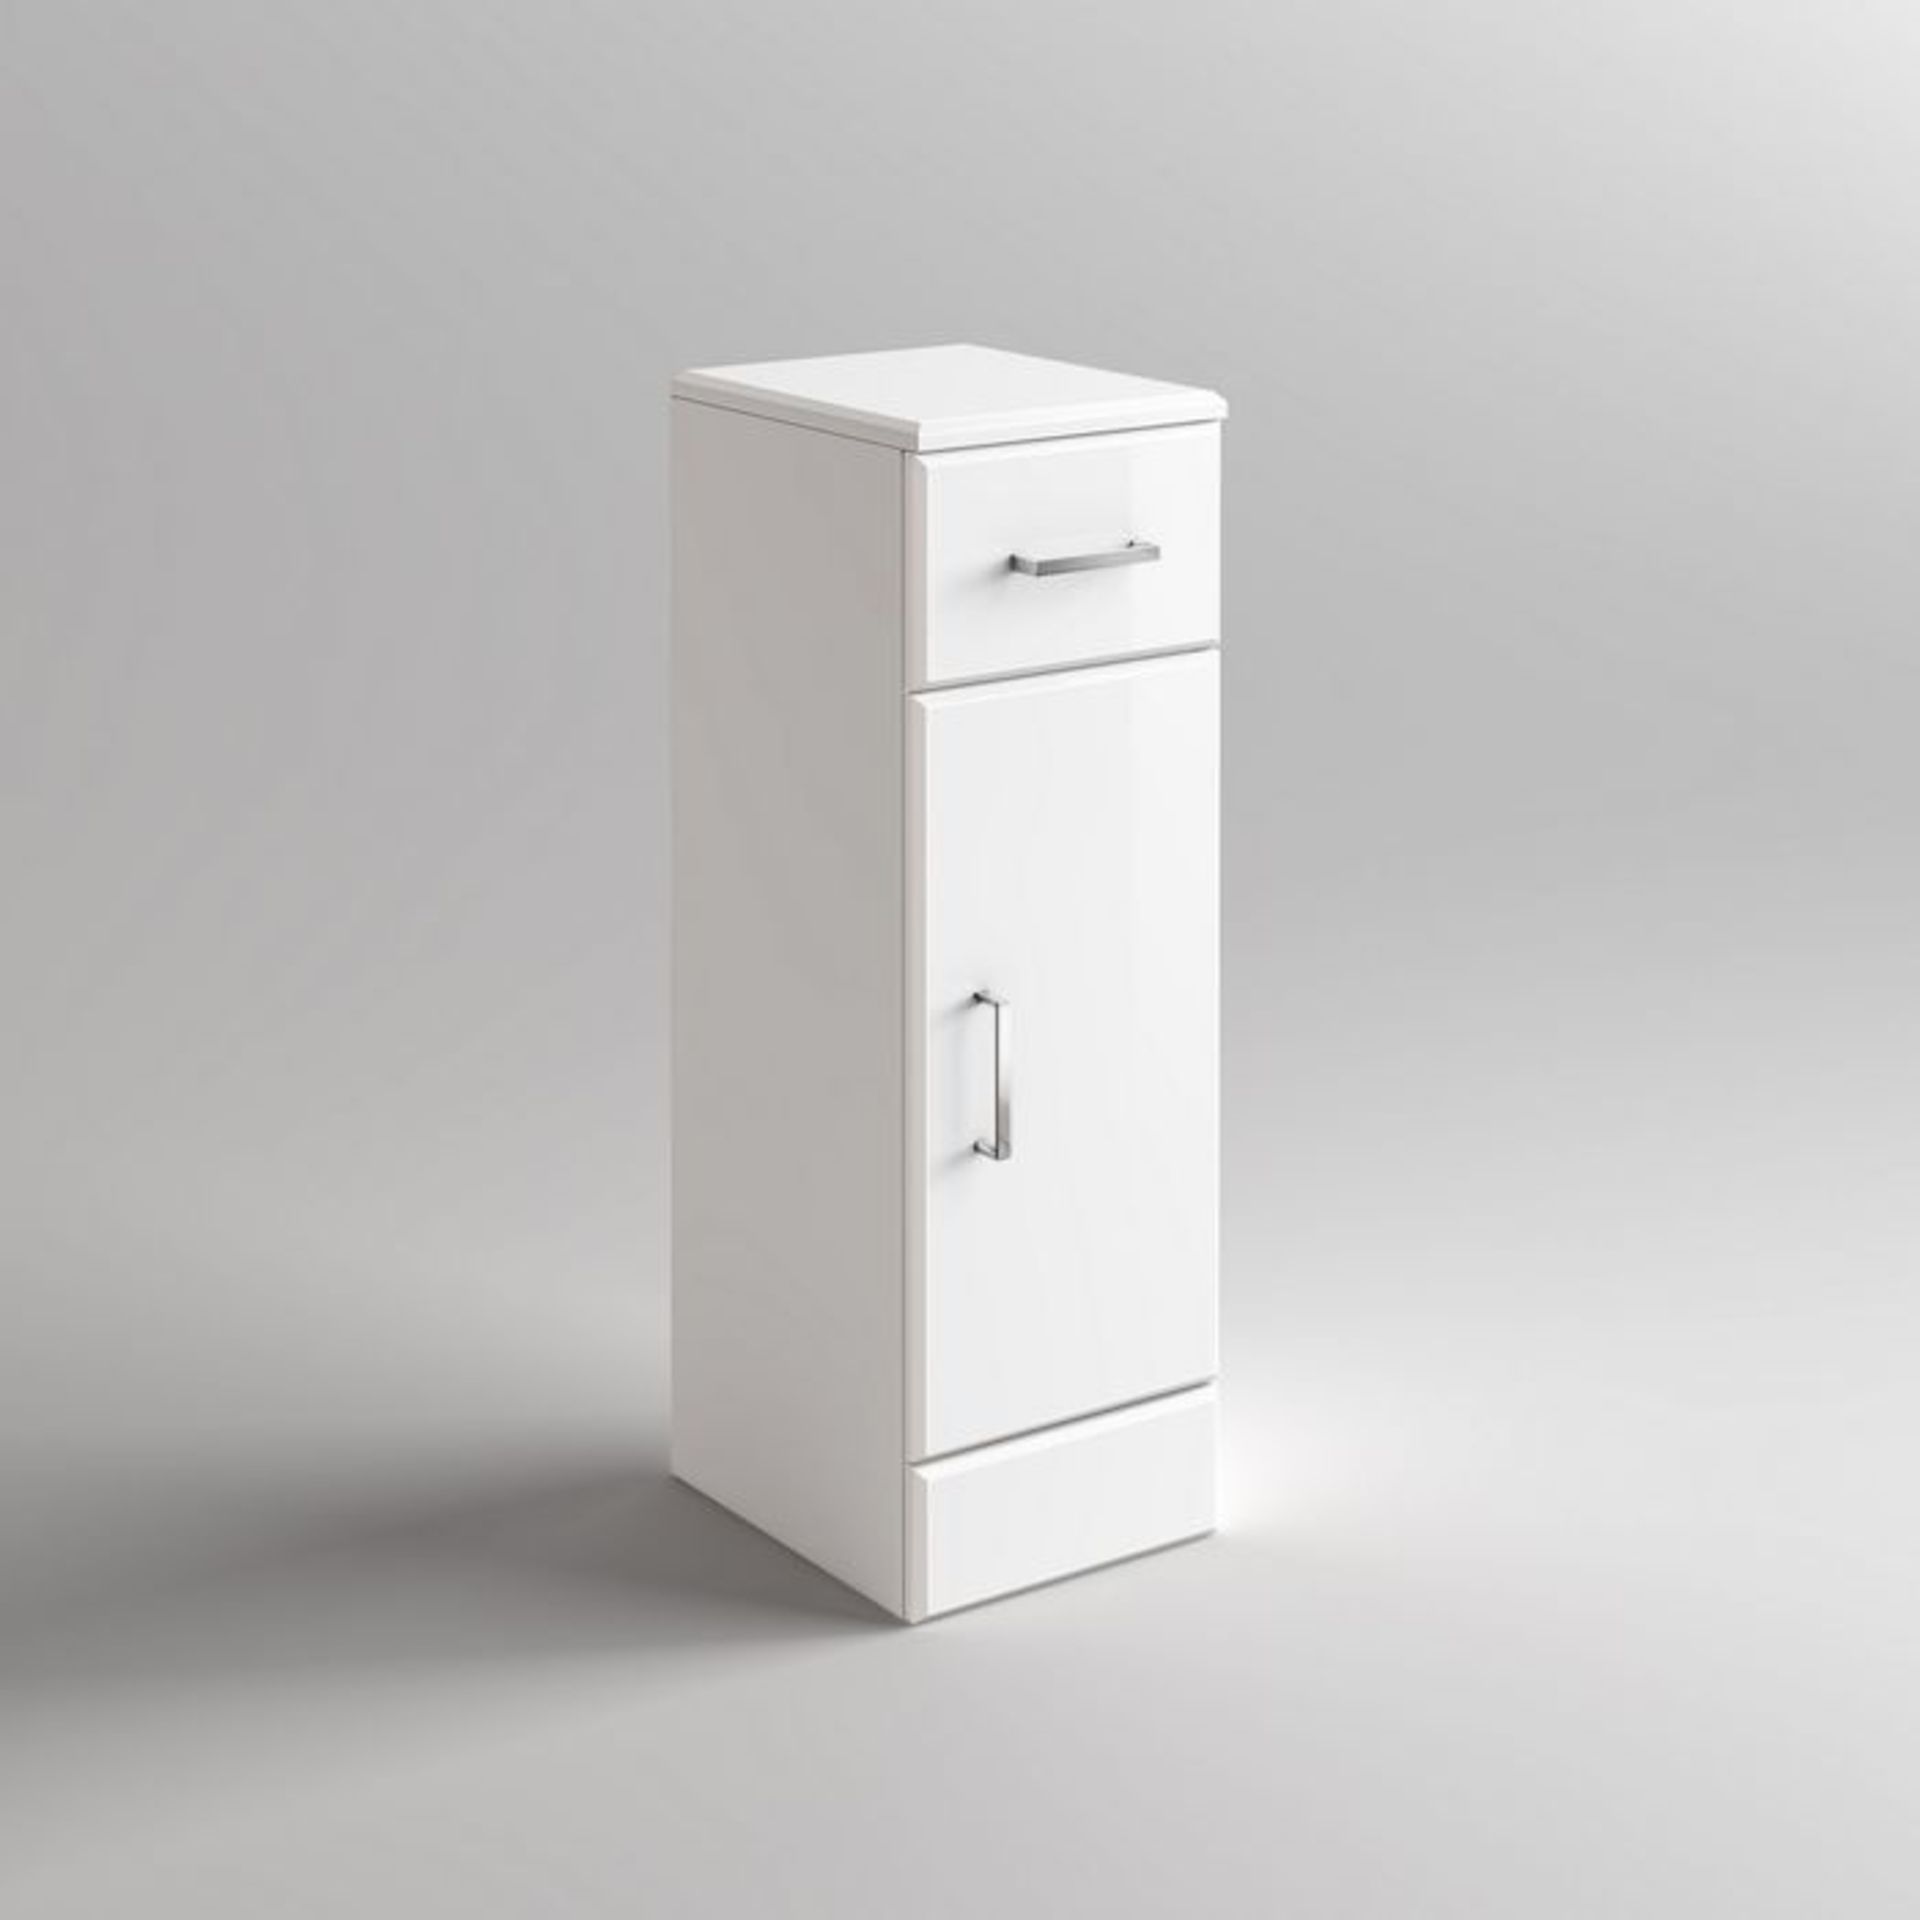 (Y194) 250x300mm Quartz Gloss White Small Side Cabinet Unit. RRP £143.99. Pristine gloss white - Image 5 of 6